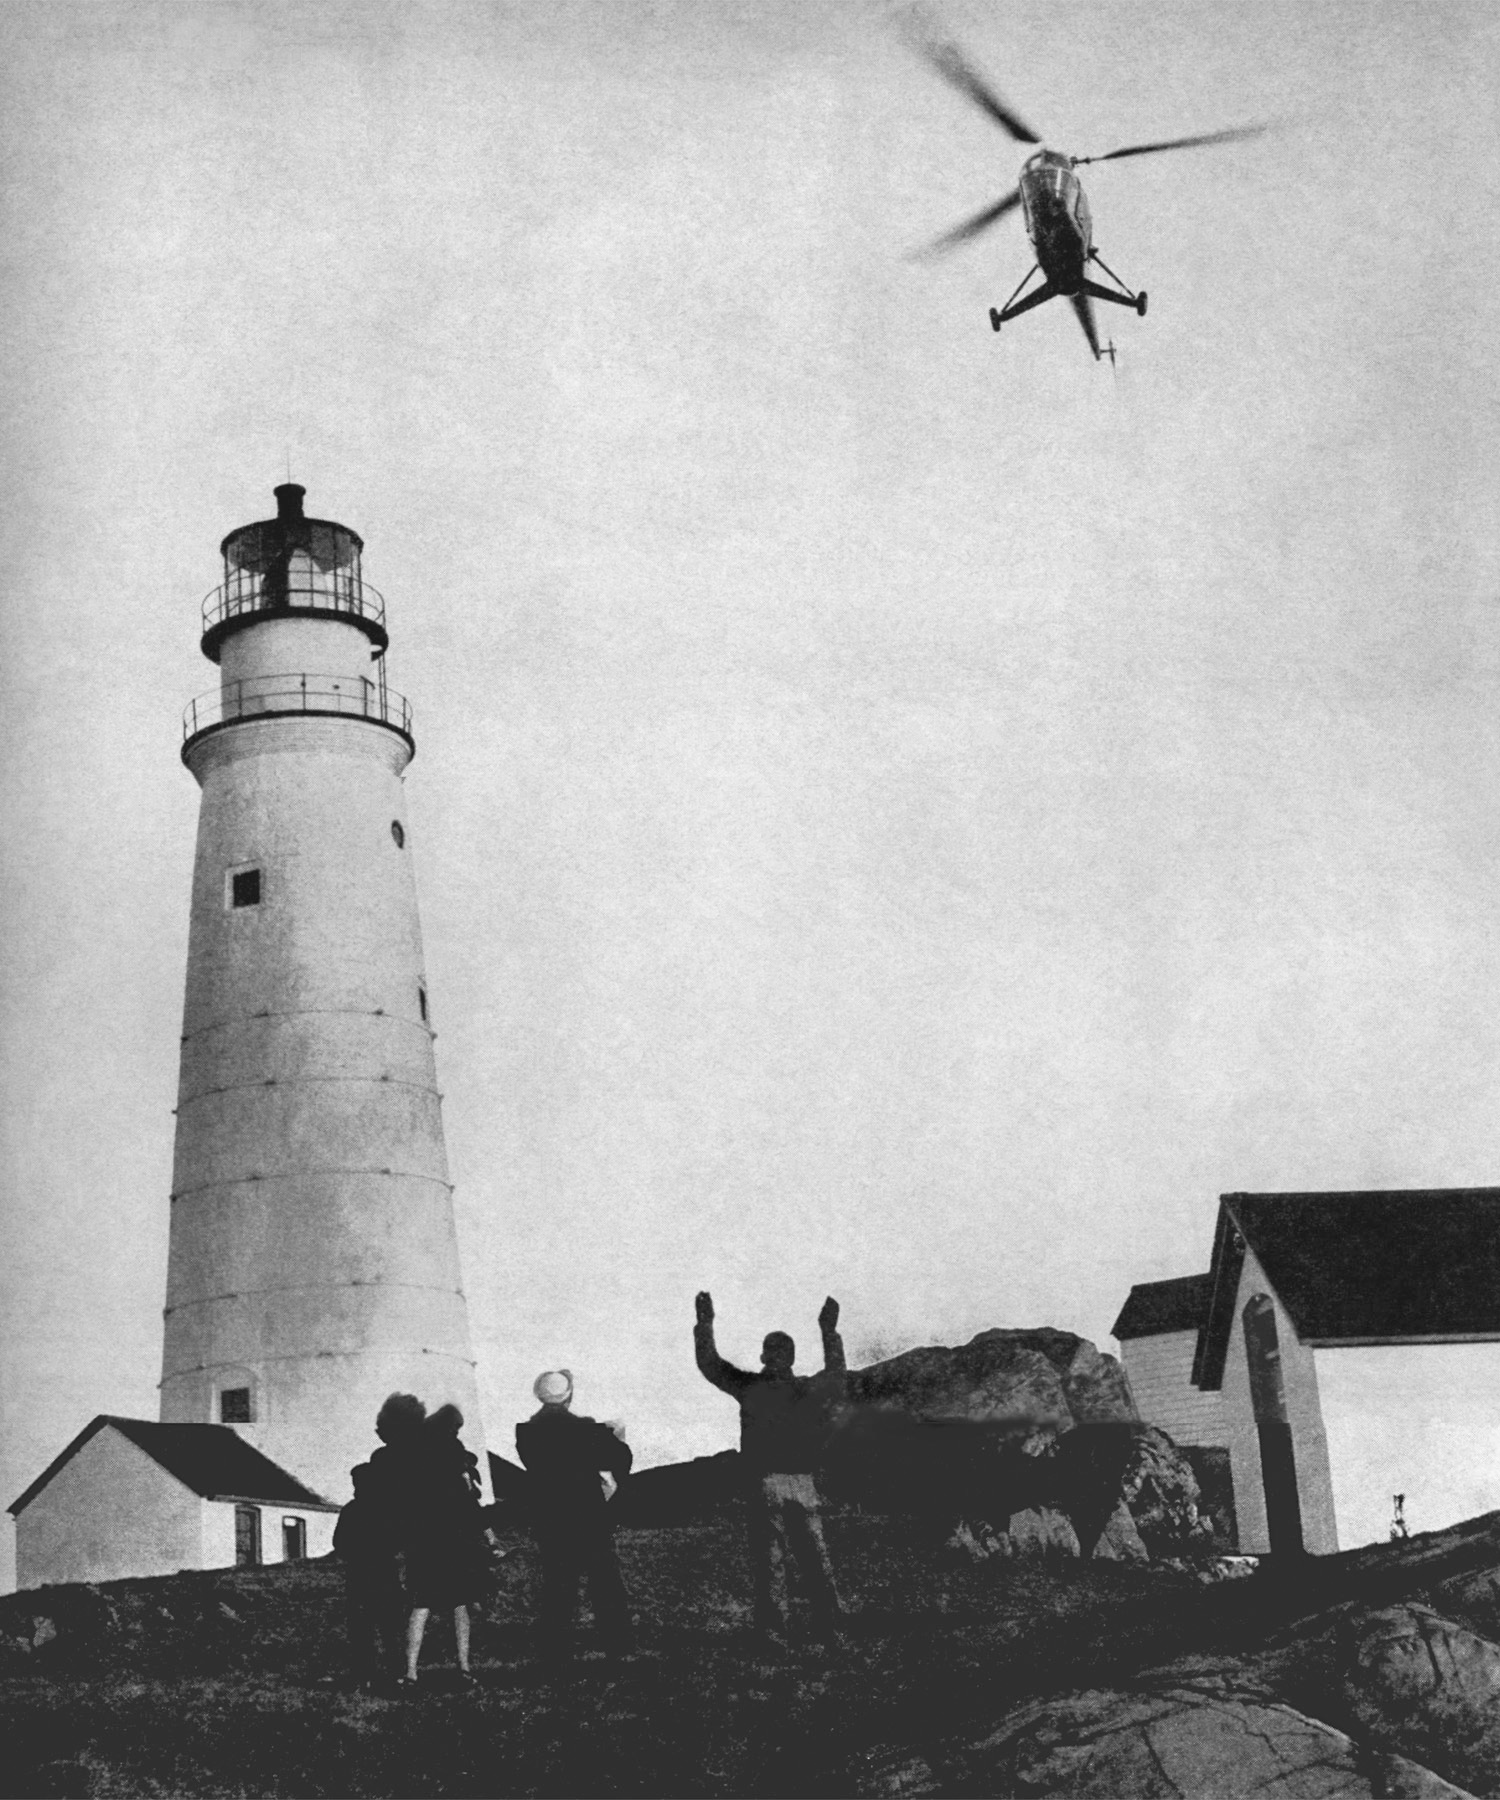 Flying Santa delivering parcels by helicopter, 1946. (Courtesy U.S. Coast Guard)